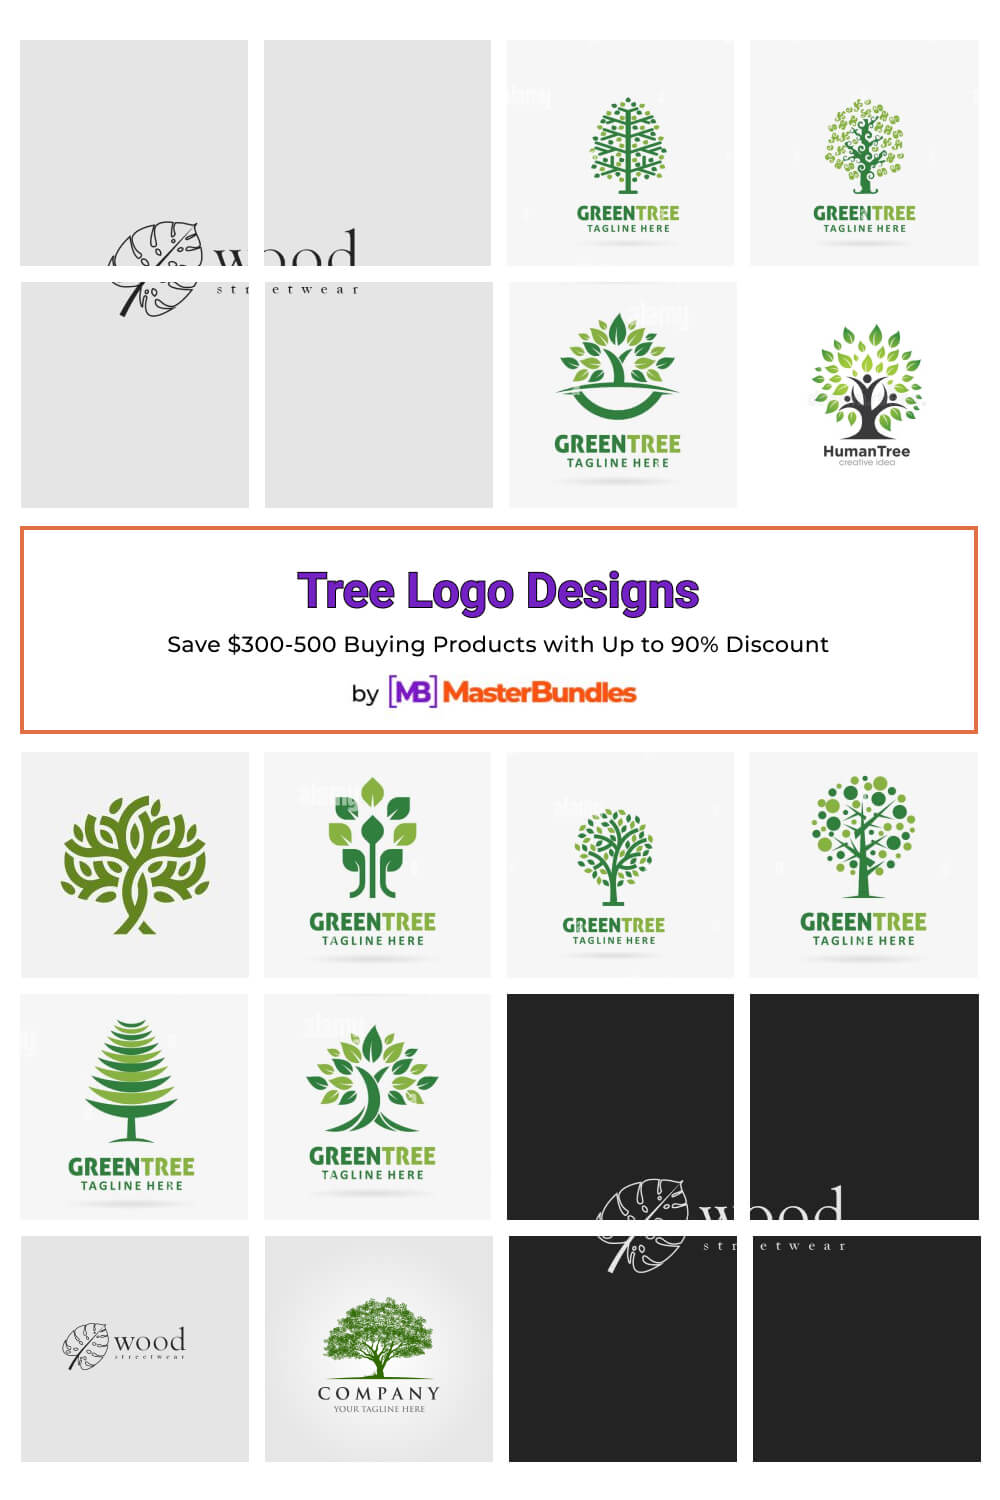 tree logo designs pinterest image.